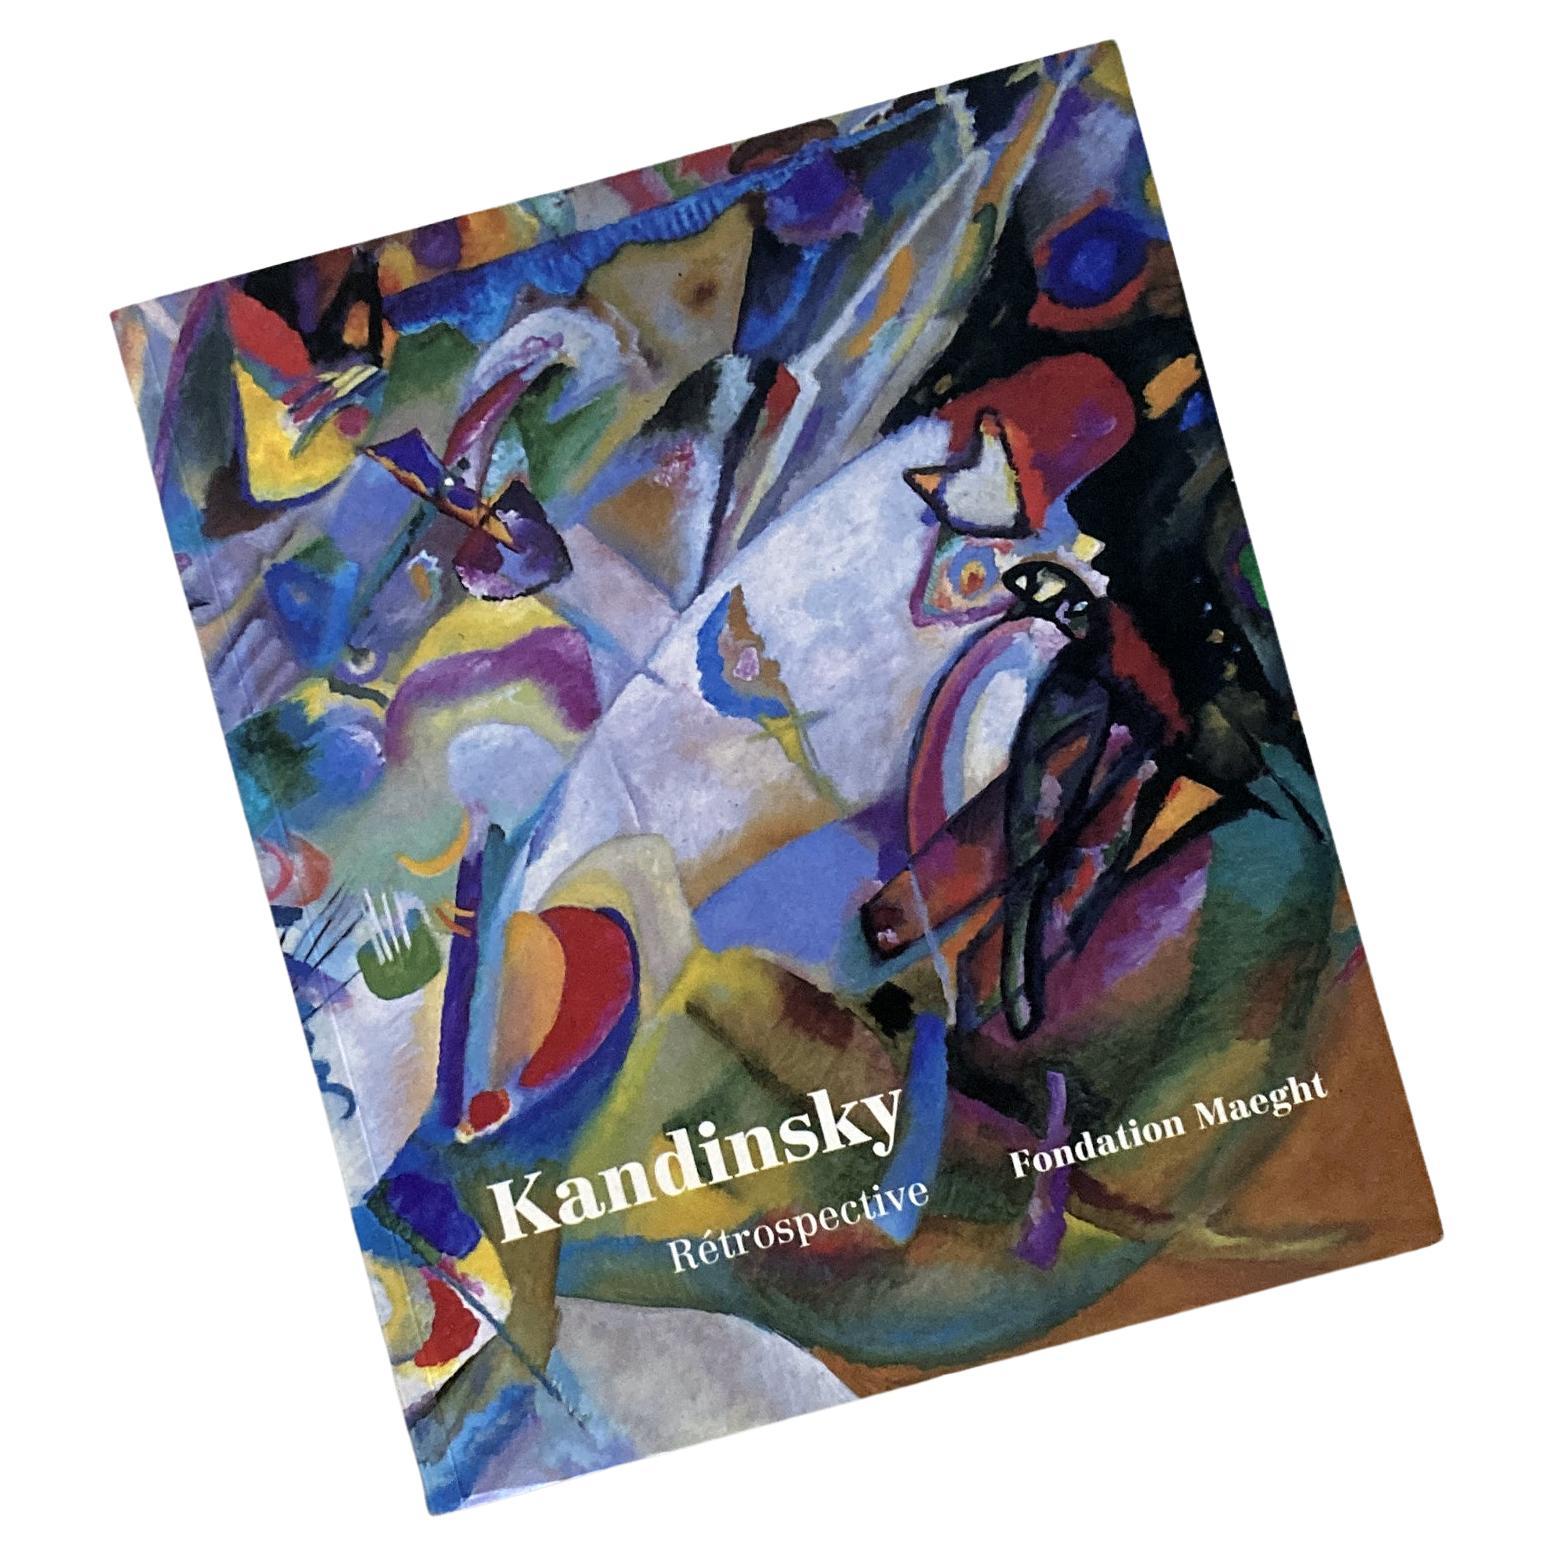 Kandinsky Rétrospective, Fondation Maeght, France 2001, 1st Edition